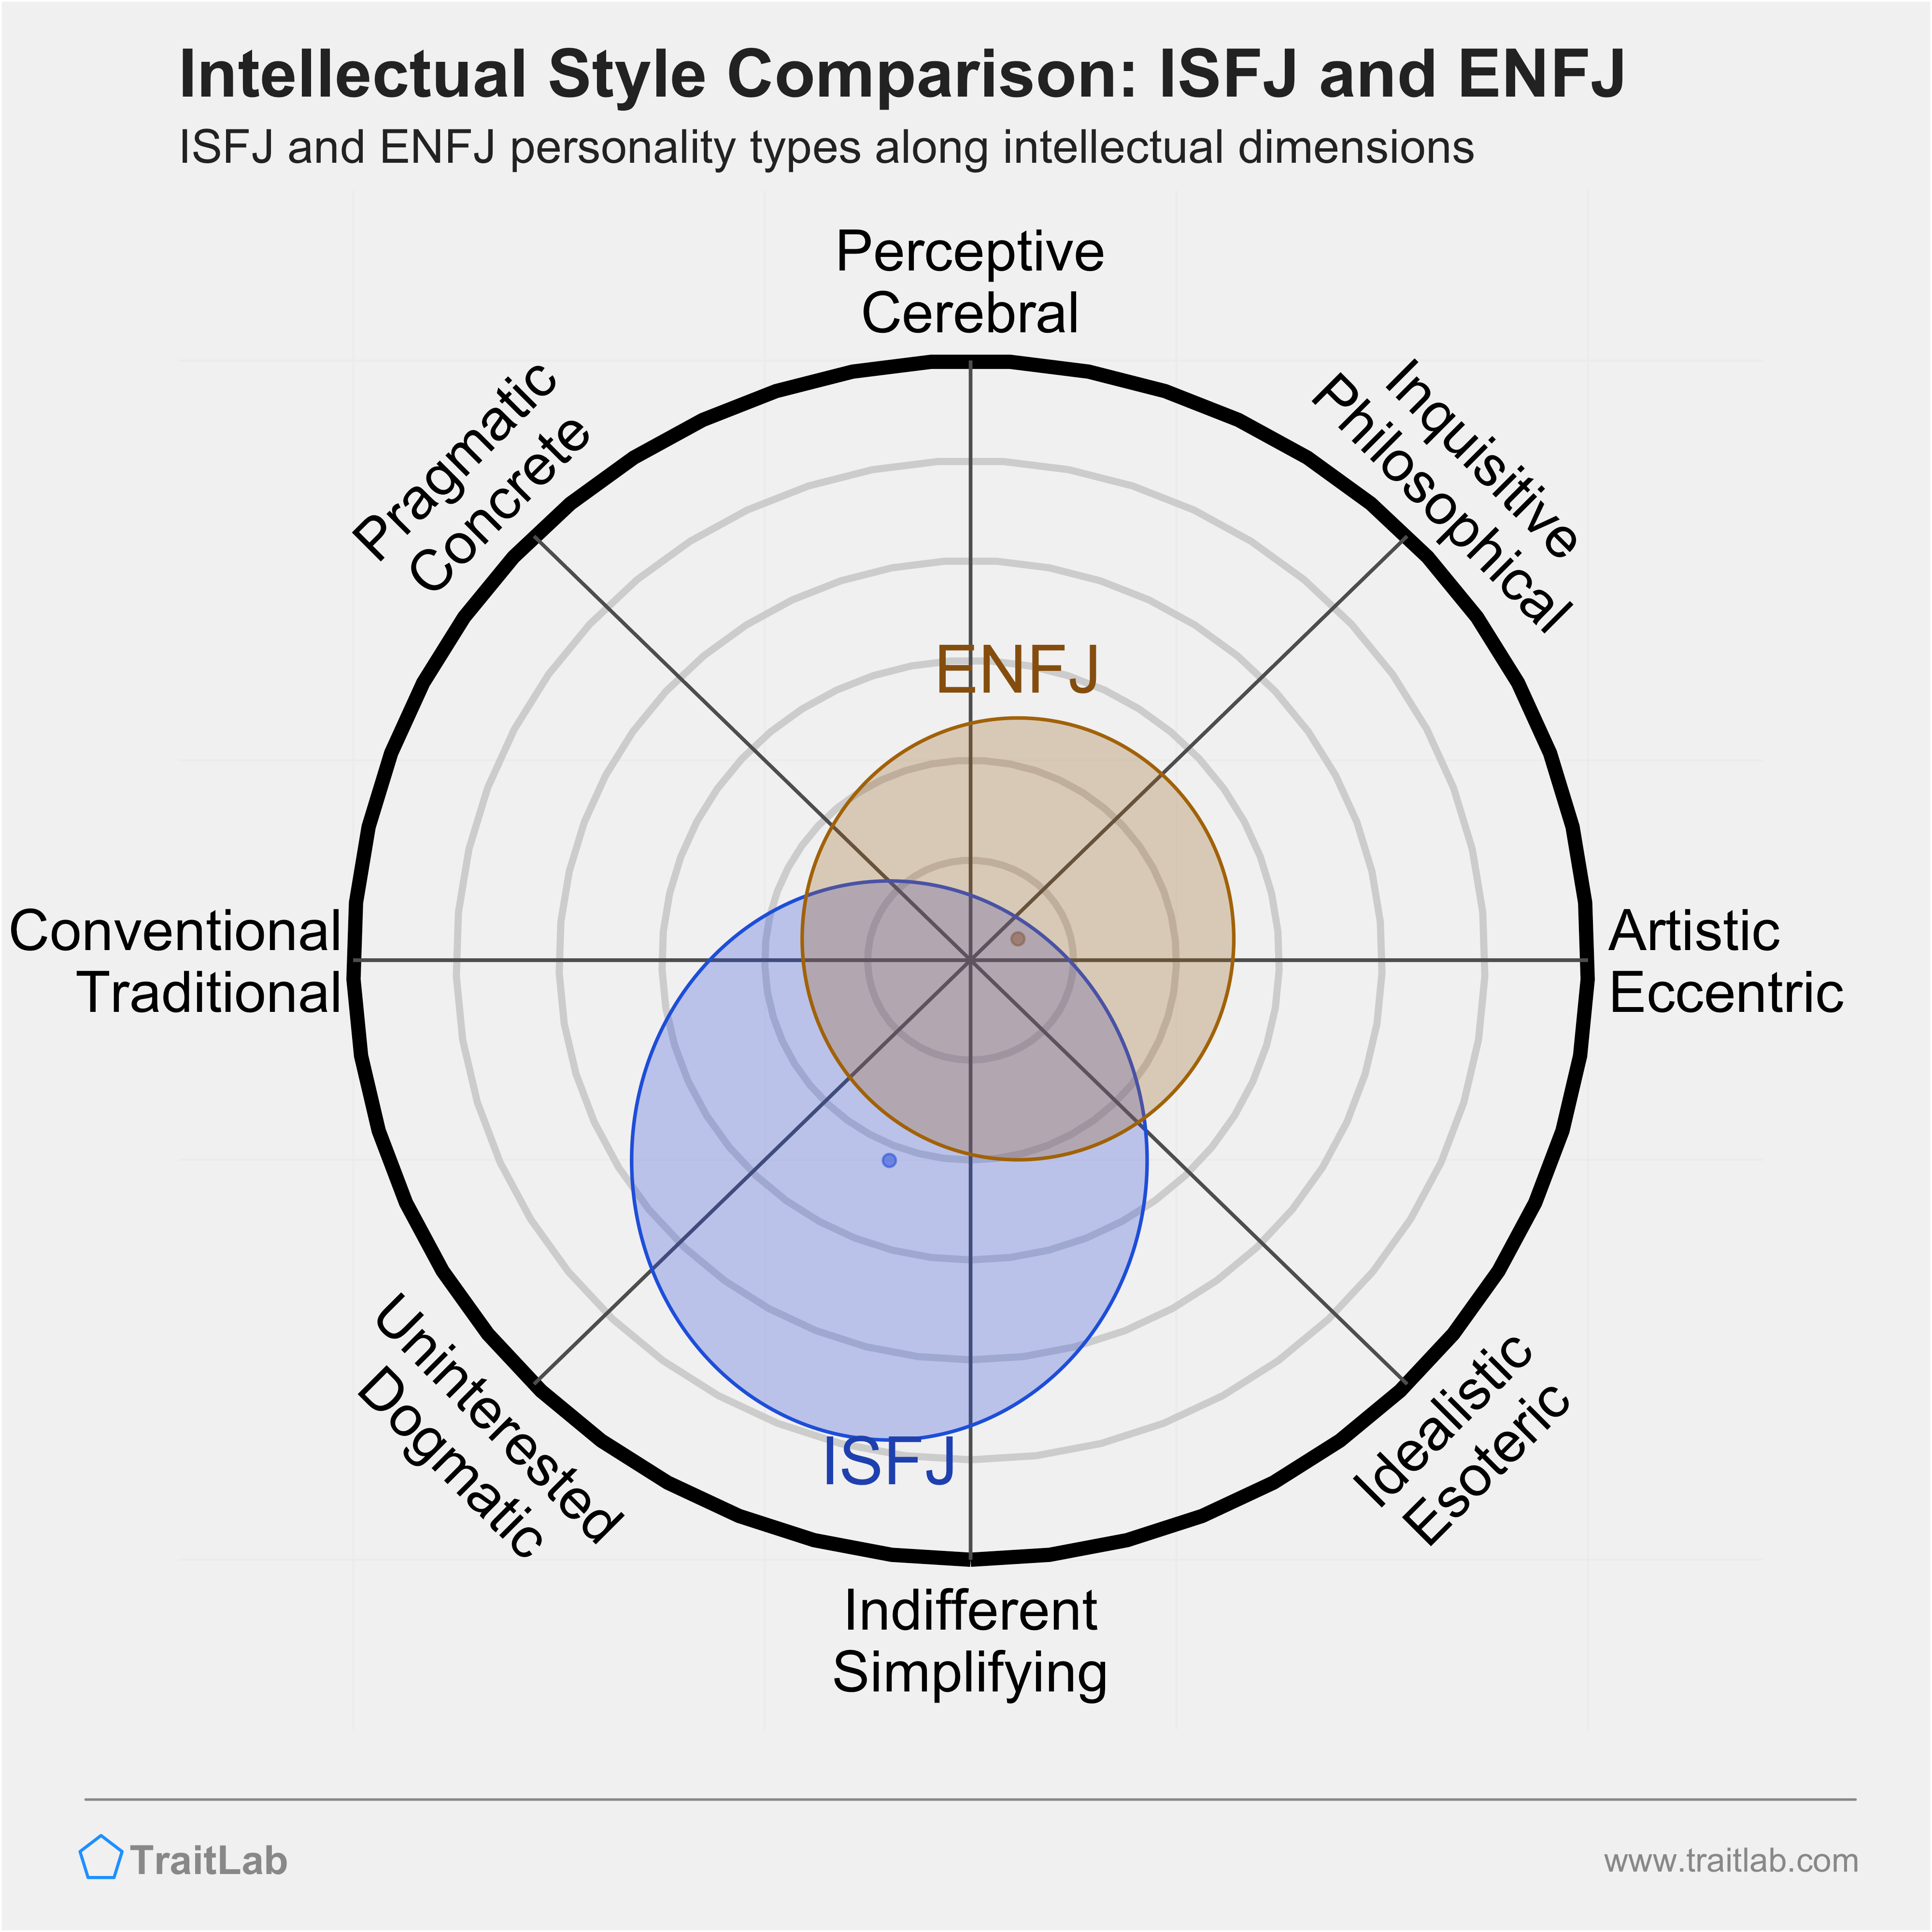 ISFJ and ENFJ comparison across intellectual dimensions